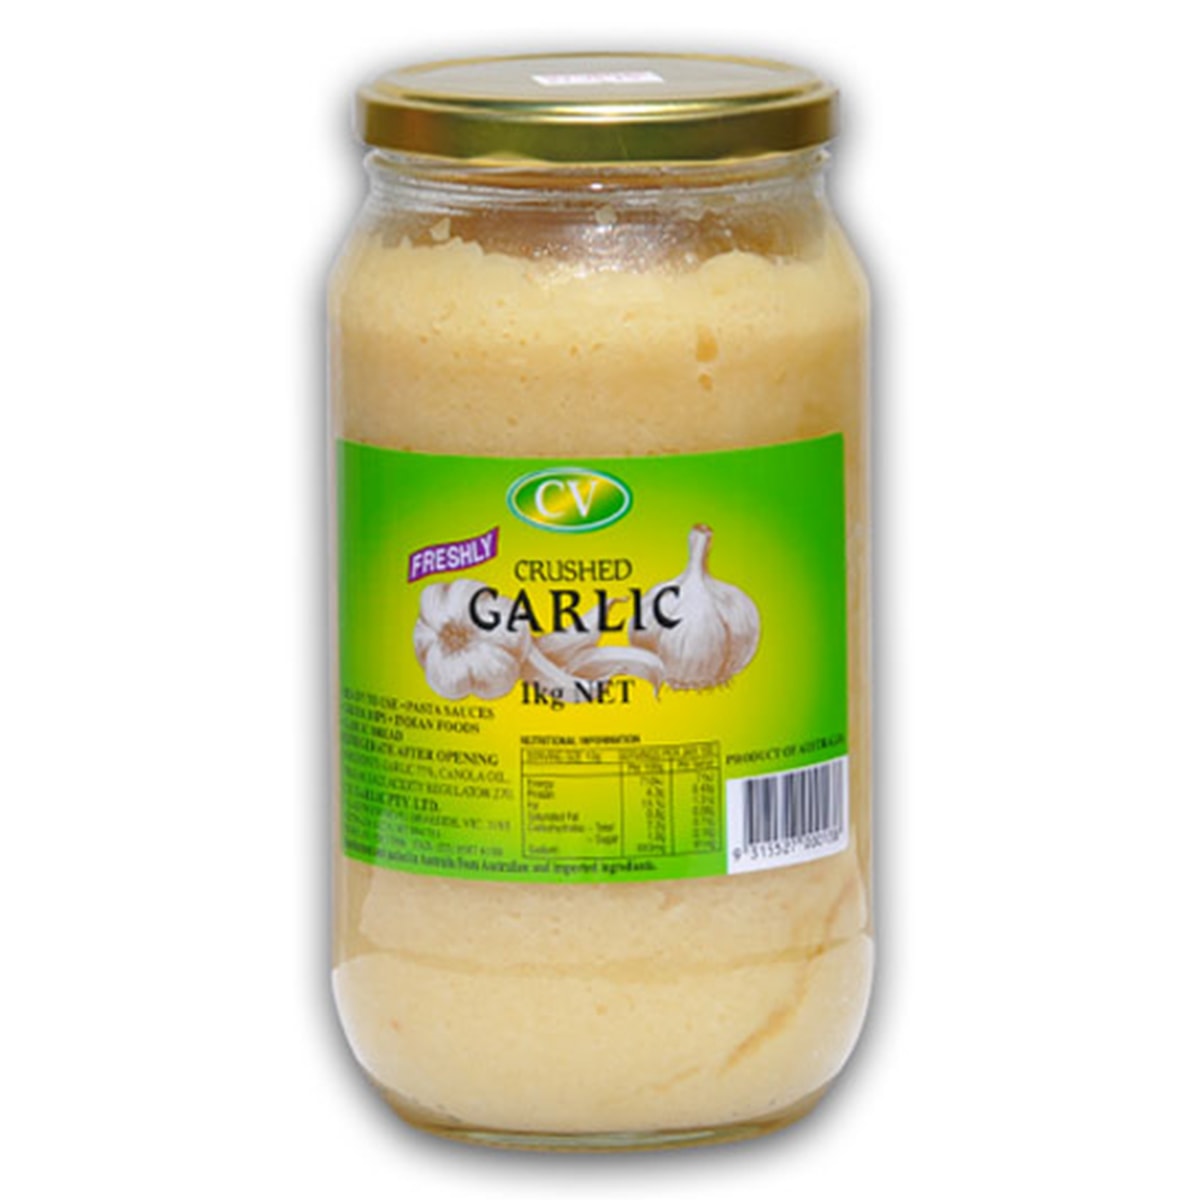 Buy CV Freshly Crushed Garlic Paste - 1 kg